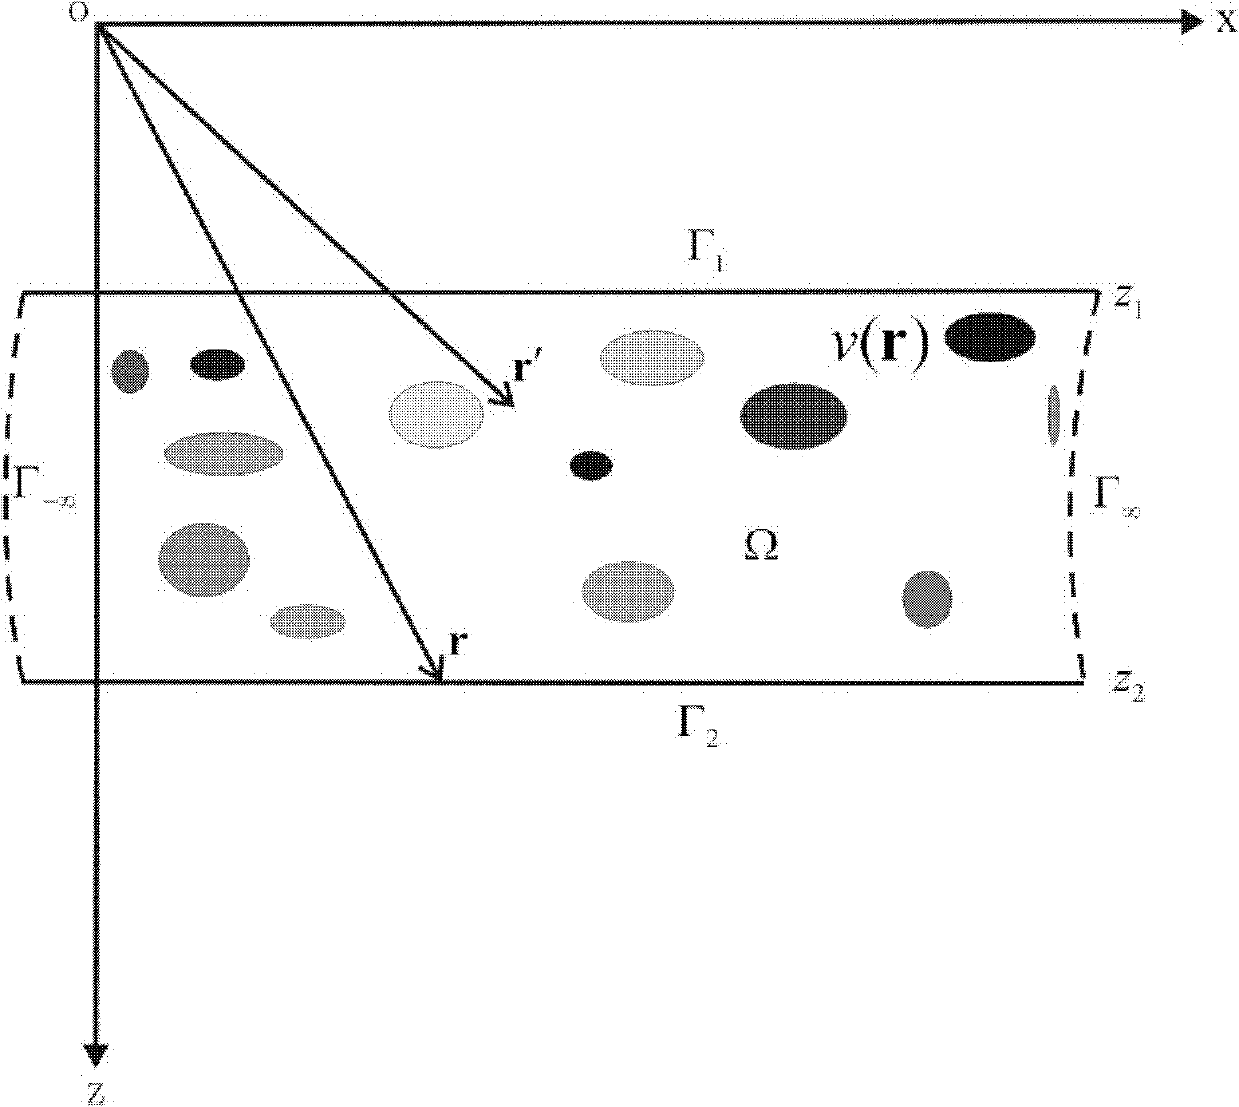 Seismic migration method for coupled transmission coefficient